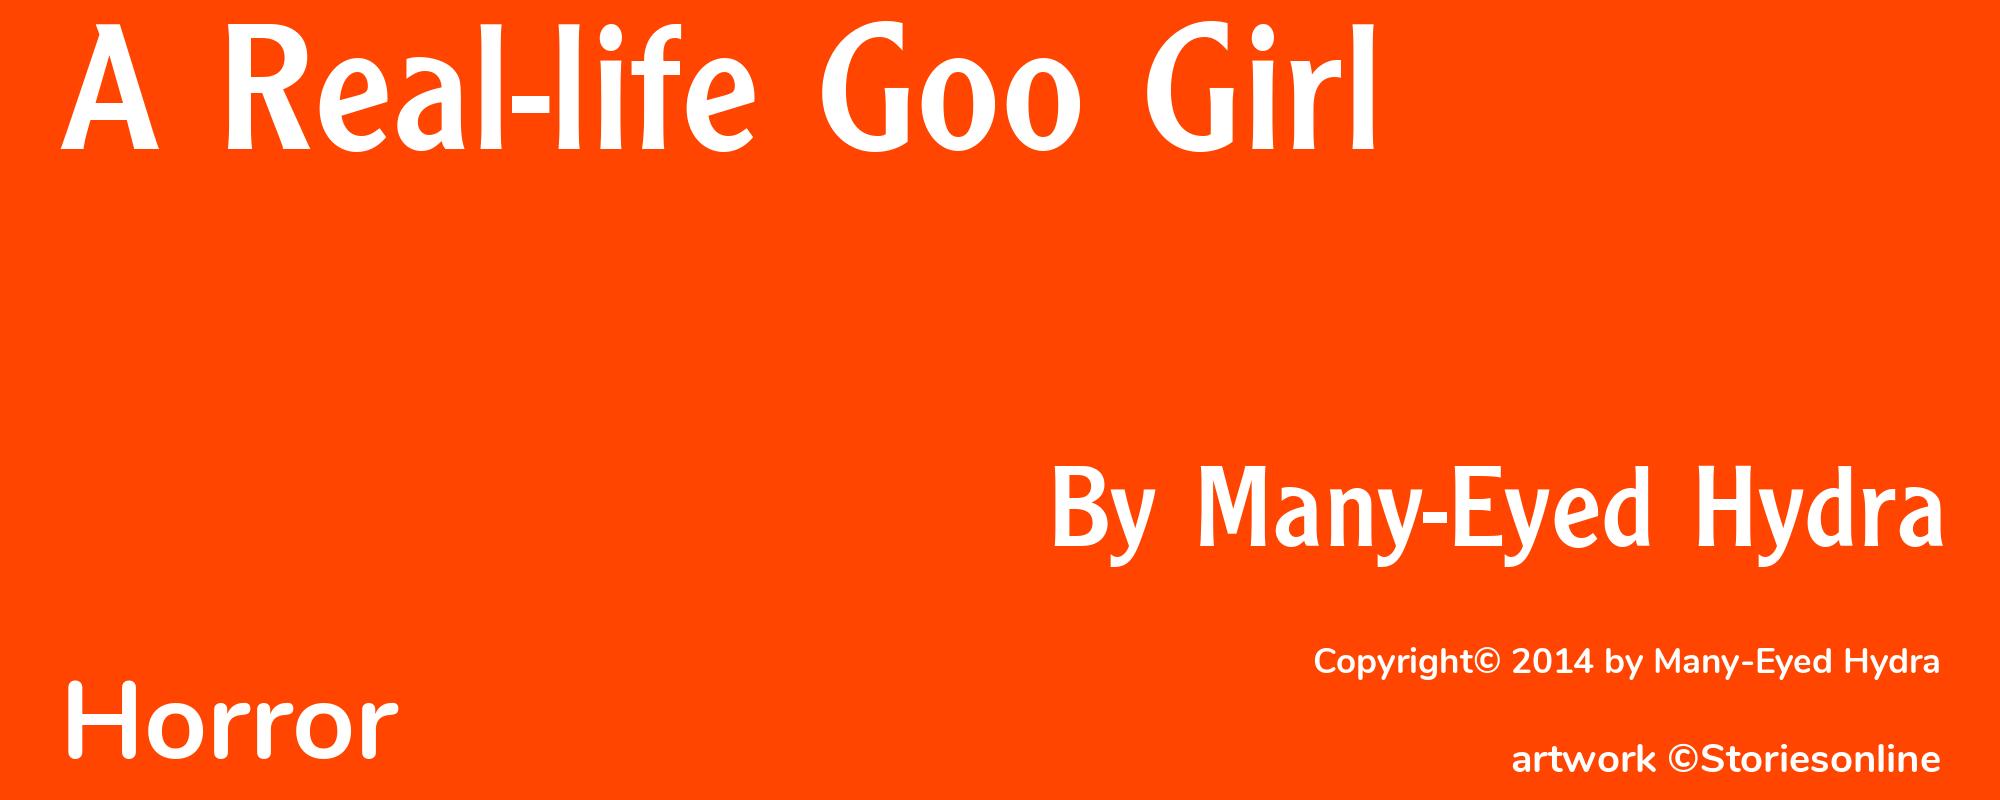 A Real-life Goo Girl - Cover